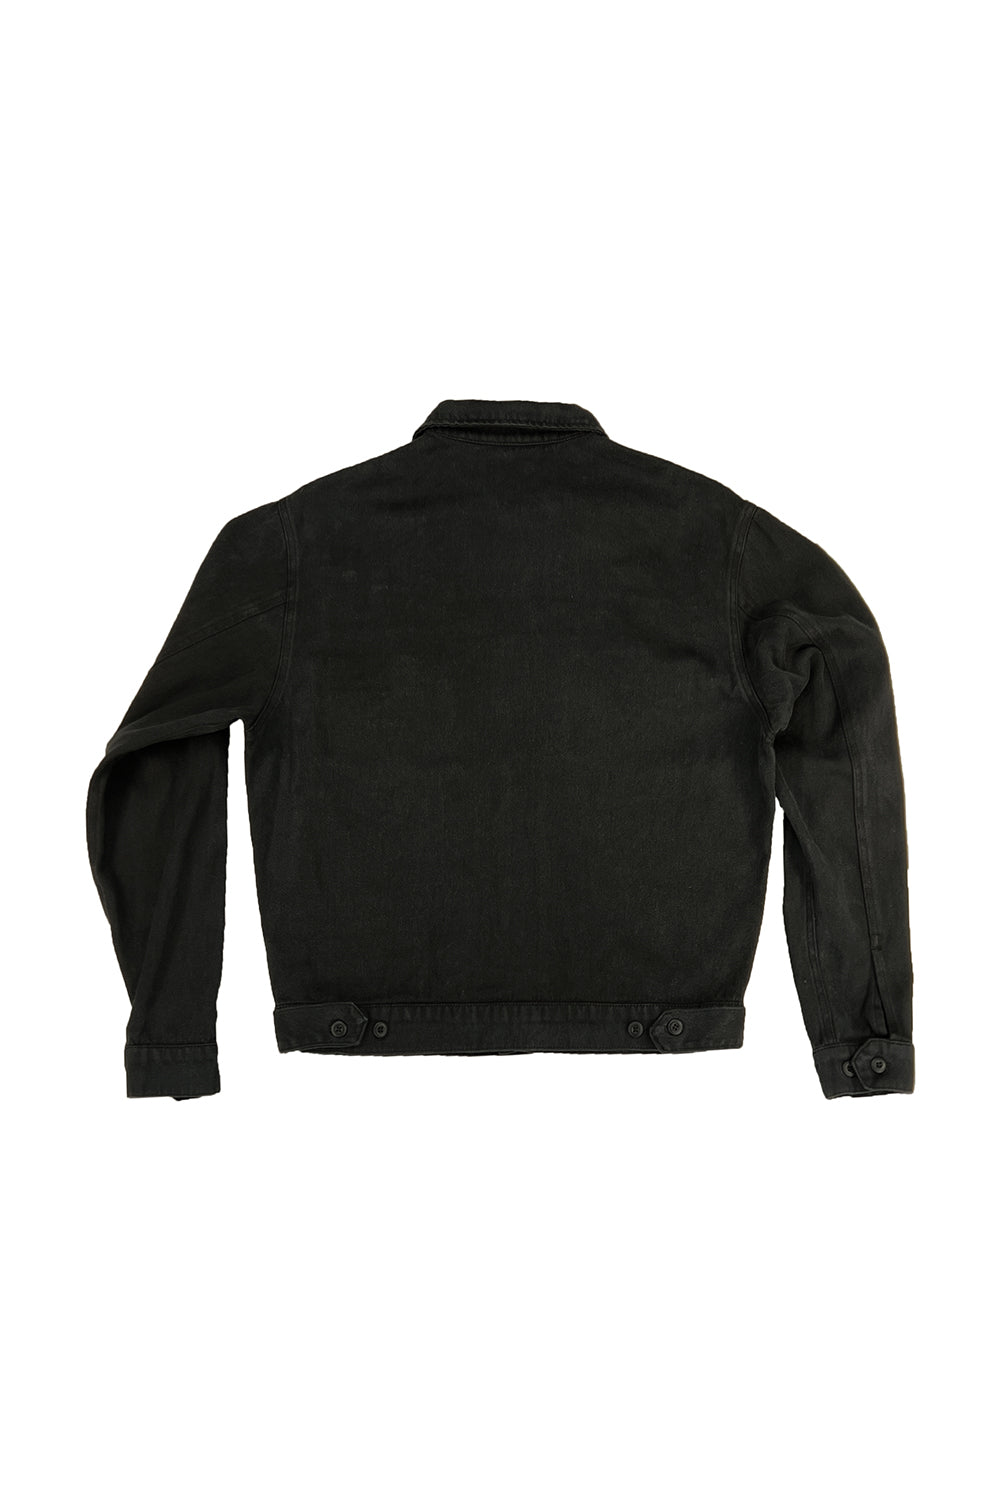 Mechanic Jacket | Jungmaven Hemp Clothing & Accessories / model_desc: Back